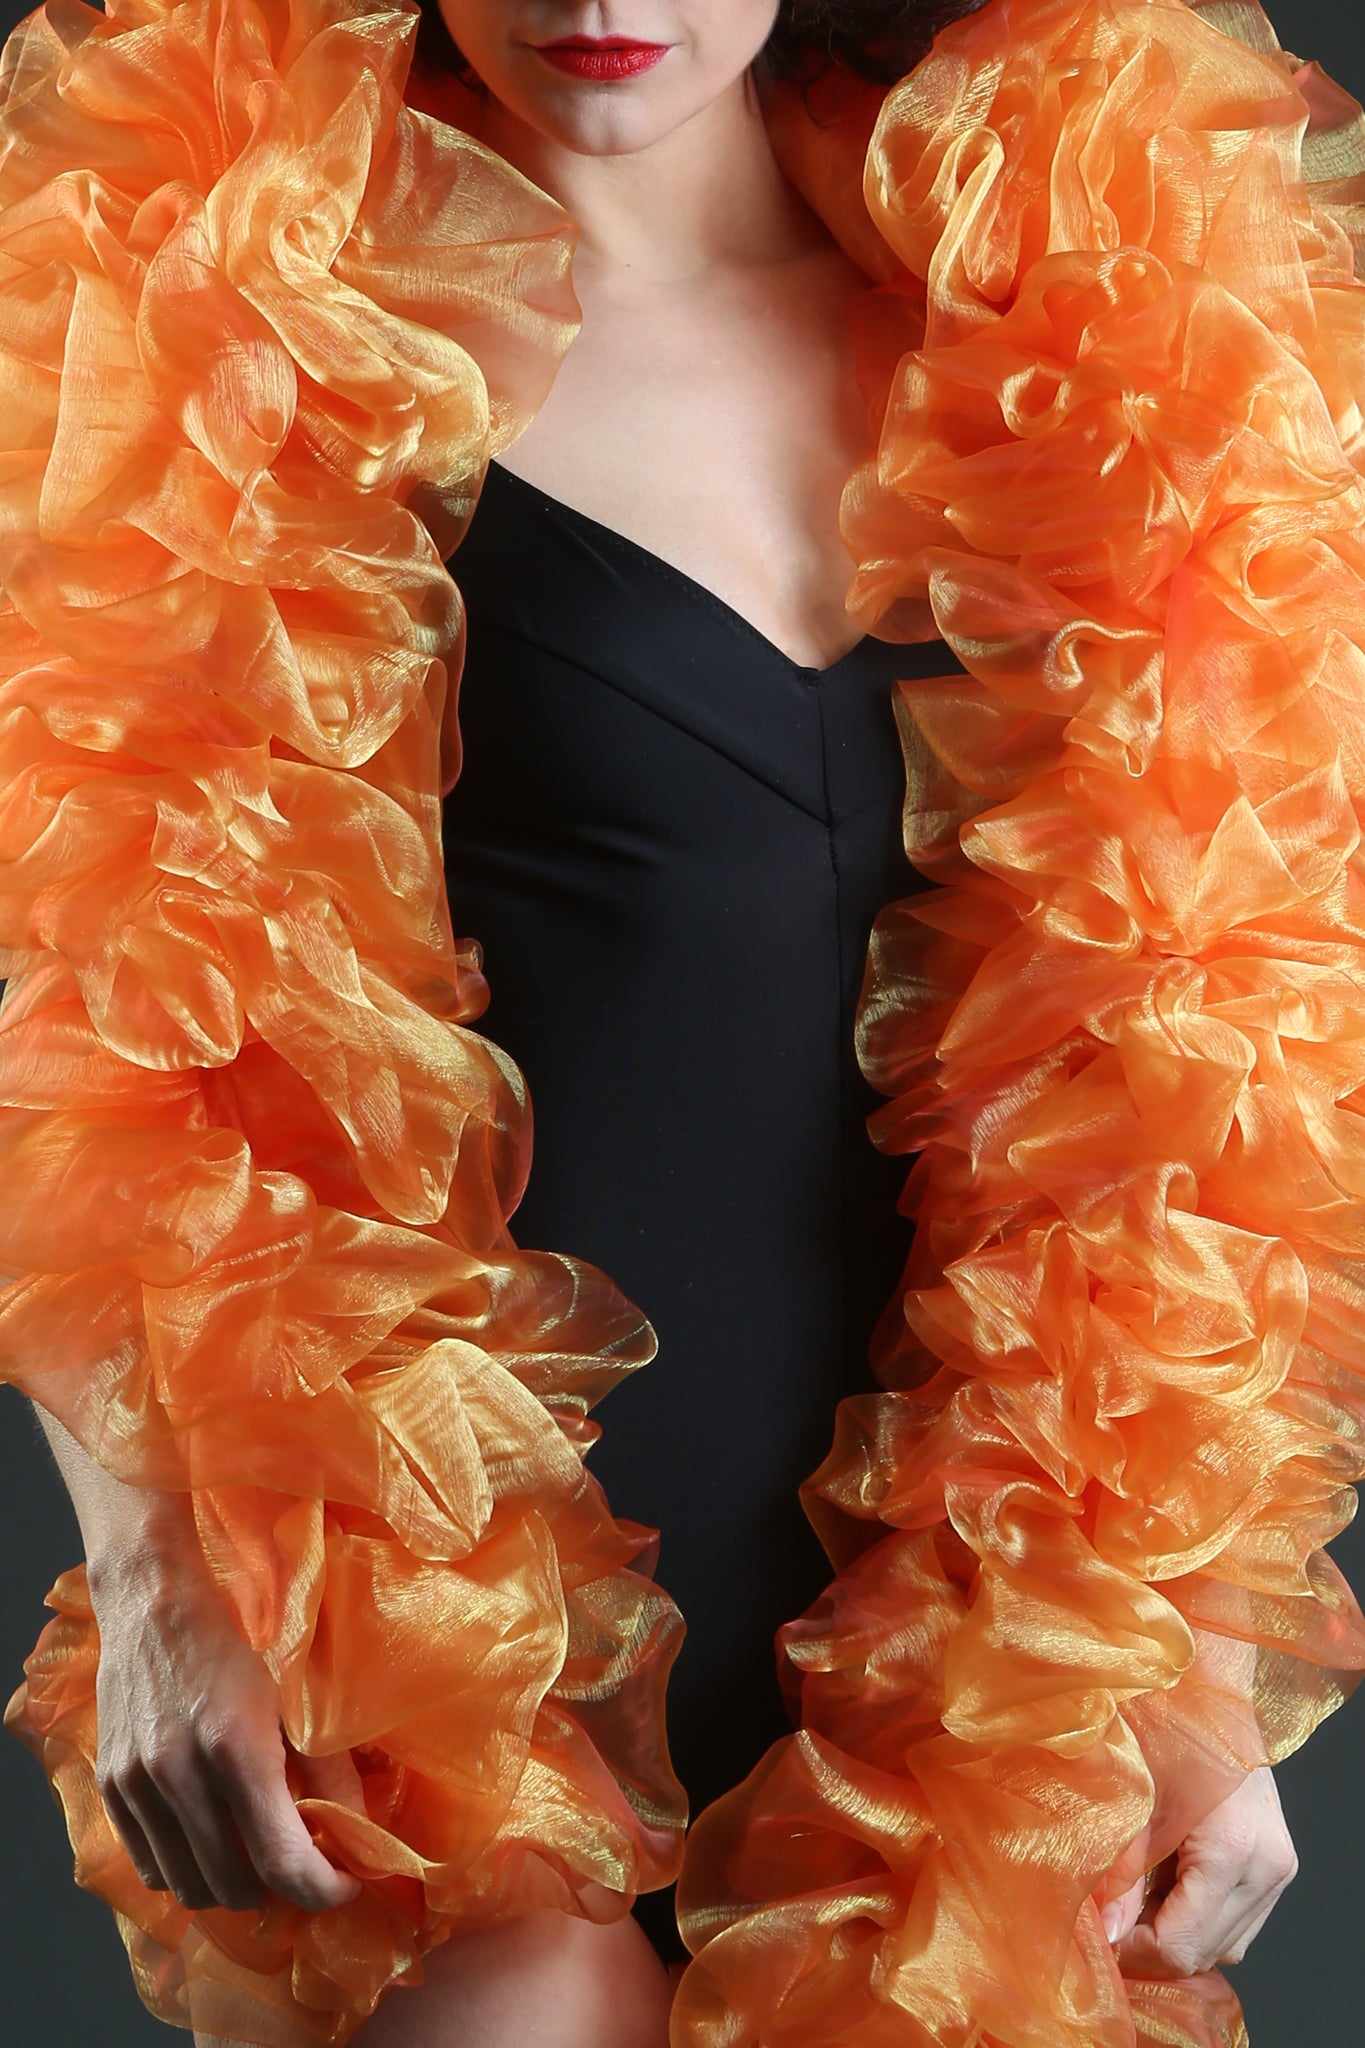 orange and yellow organza vegan boa burlesque costume